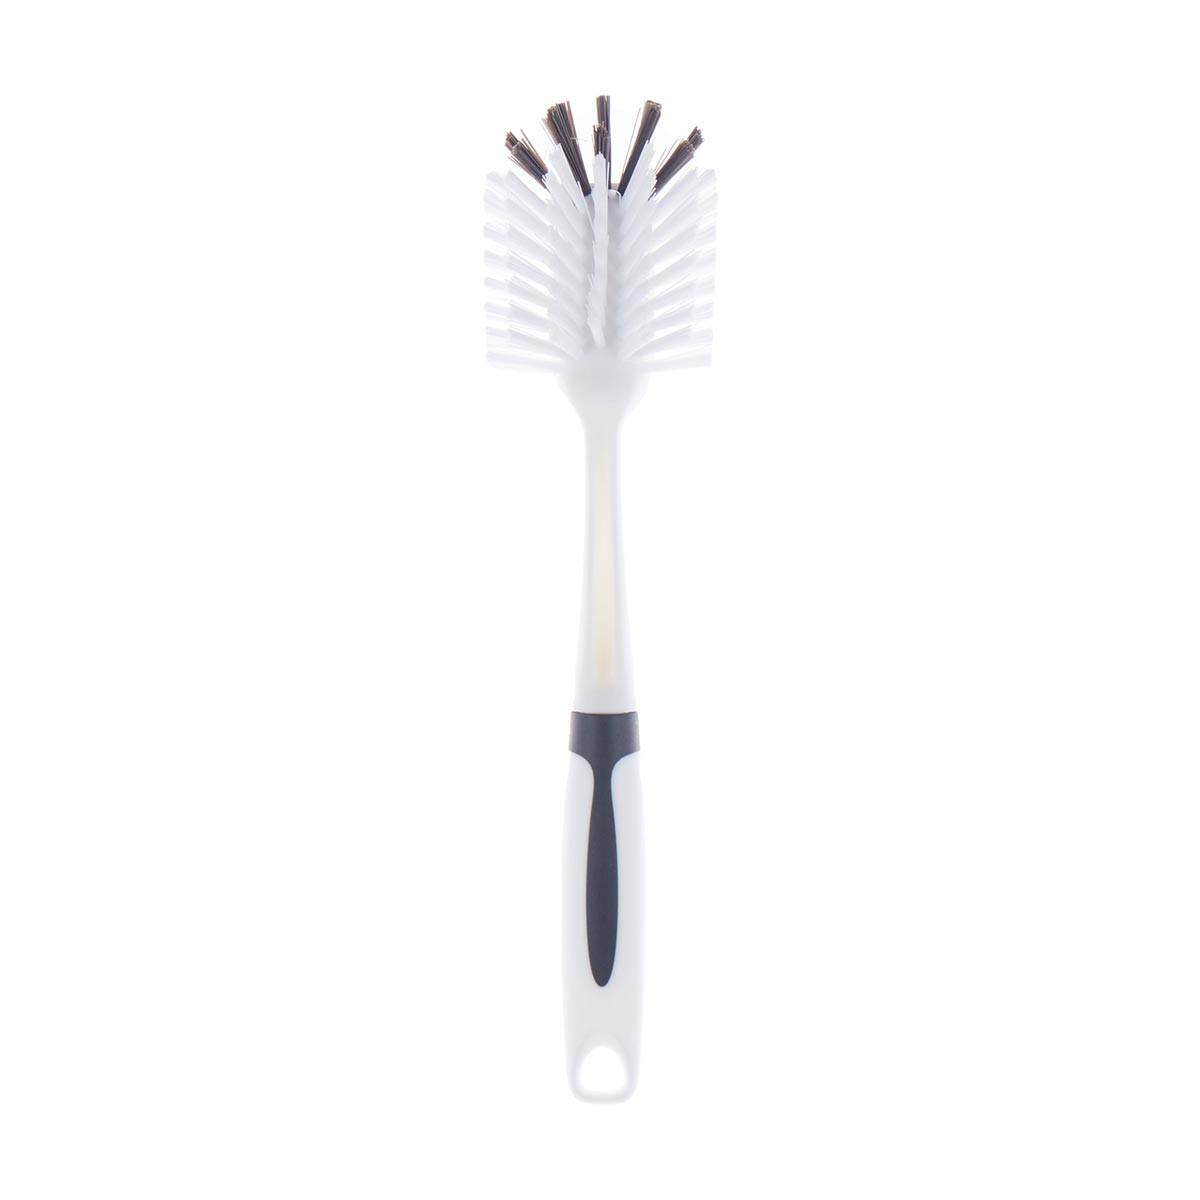 Radial Head Kitchen Brush